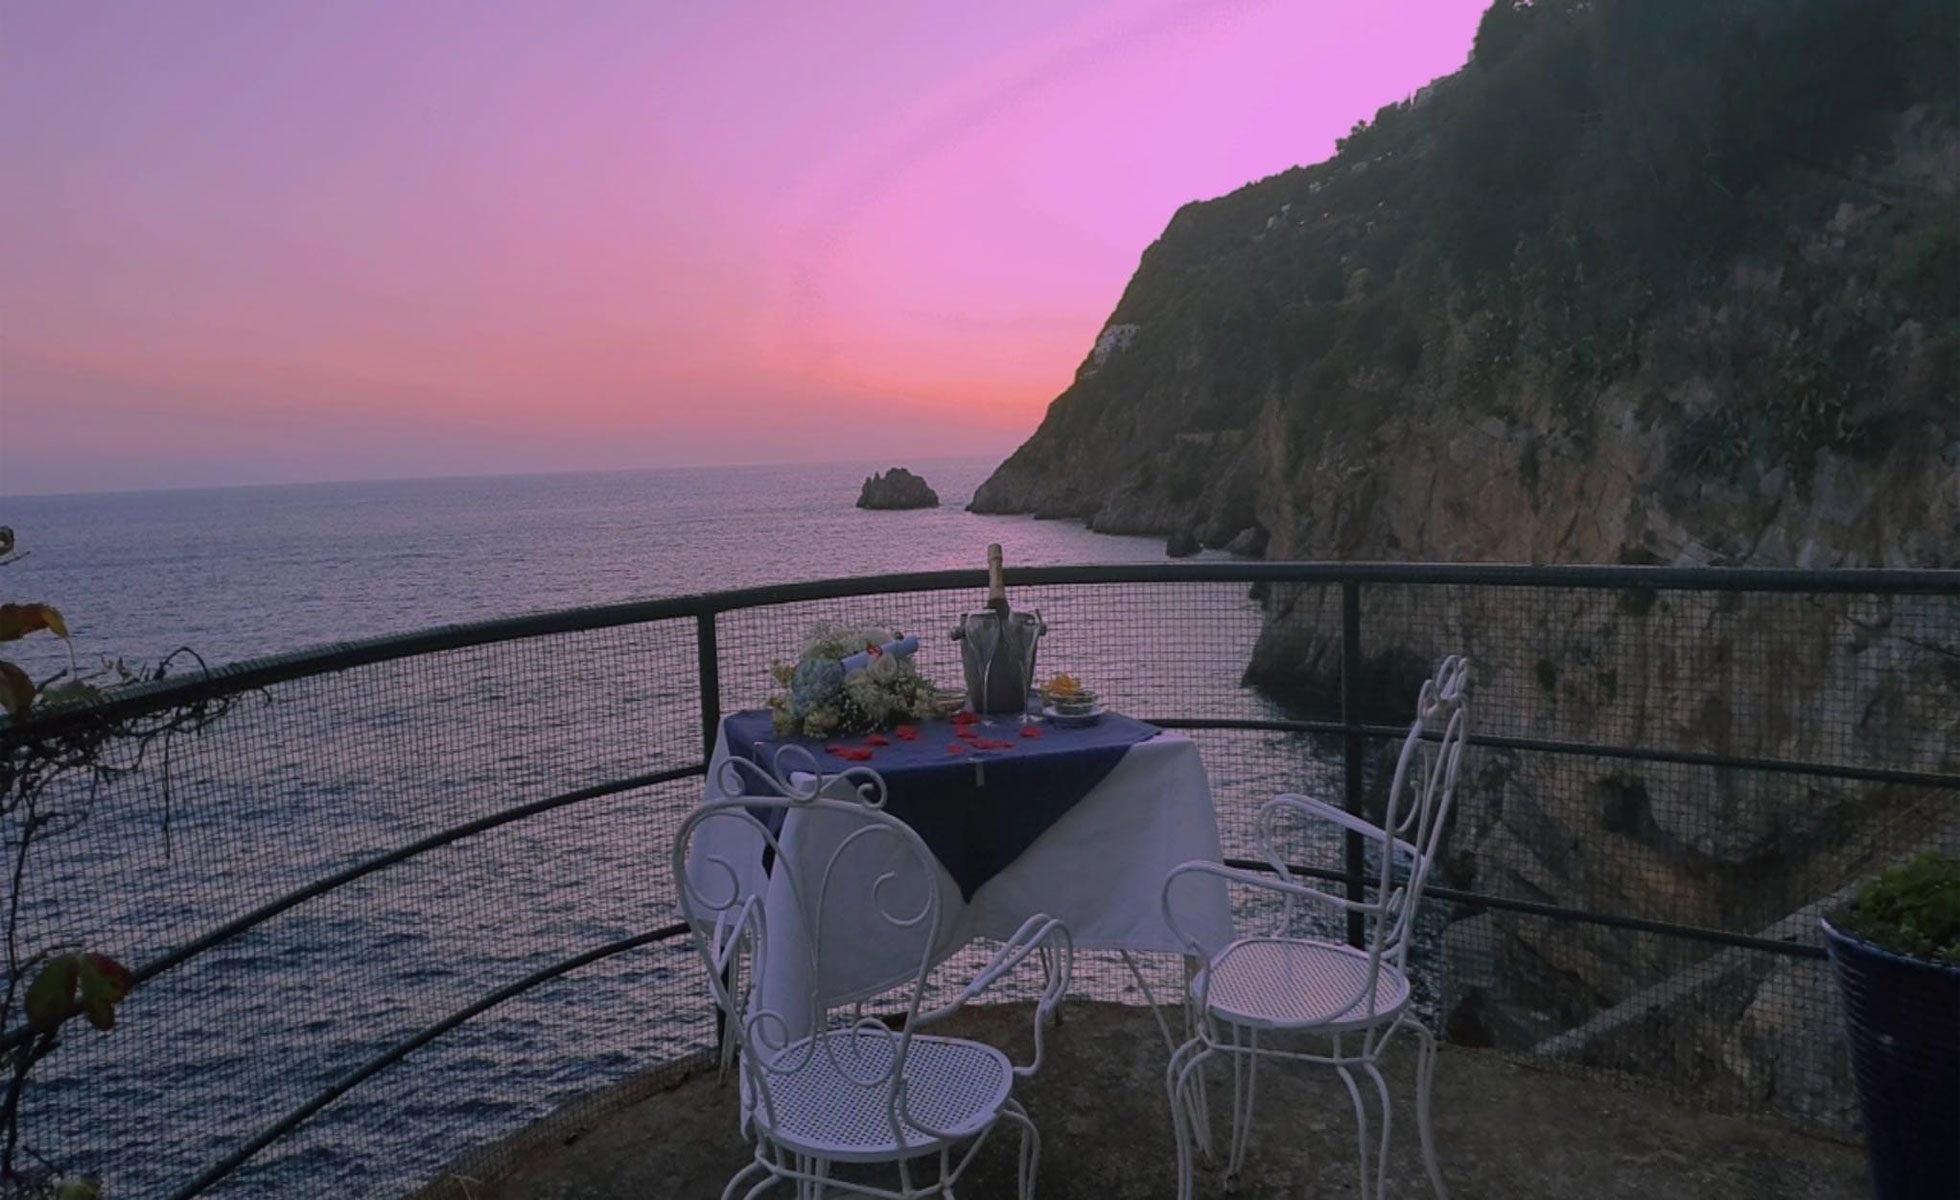 Ideas for a romantic holiday in the Amalfi Coast!